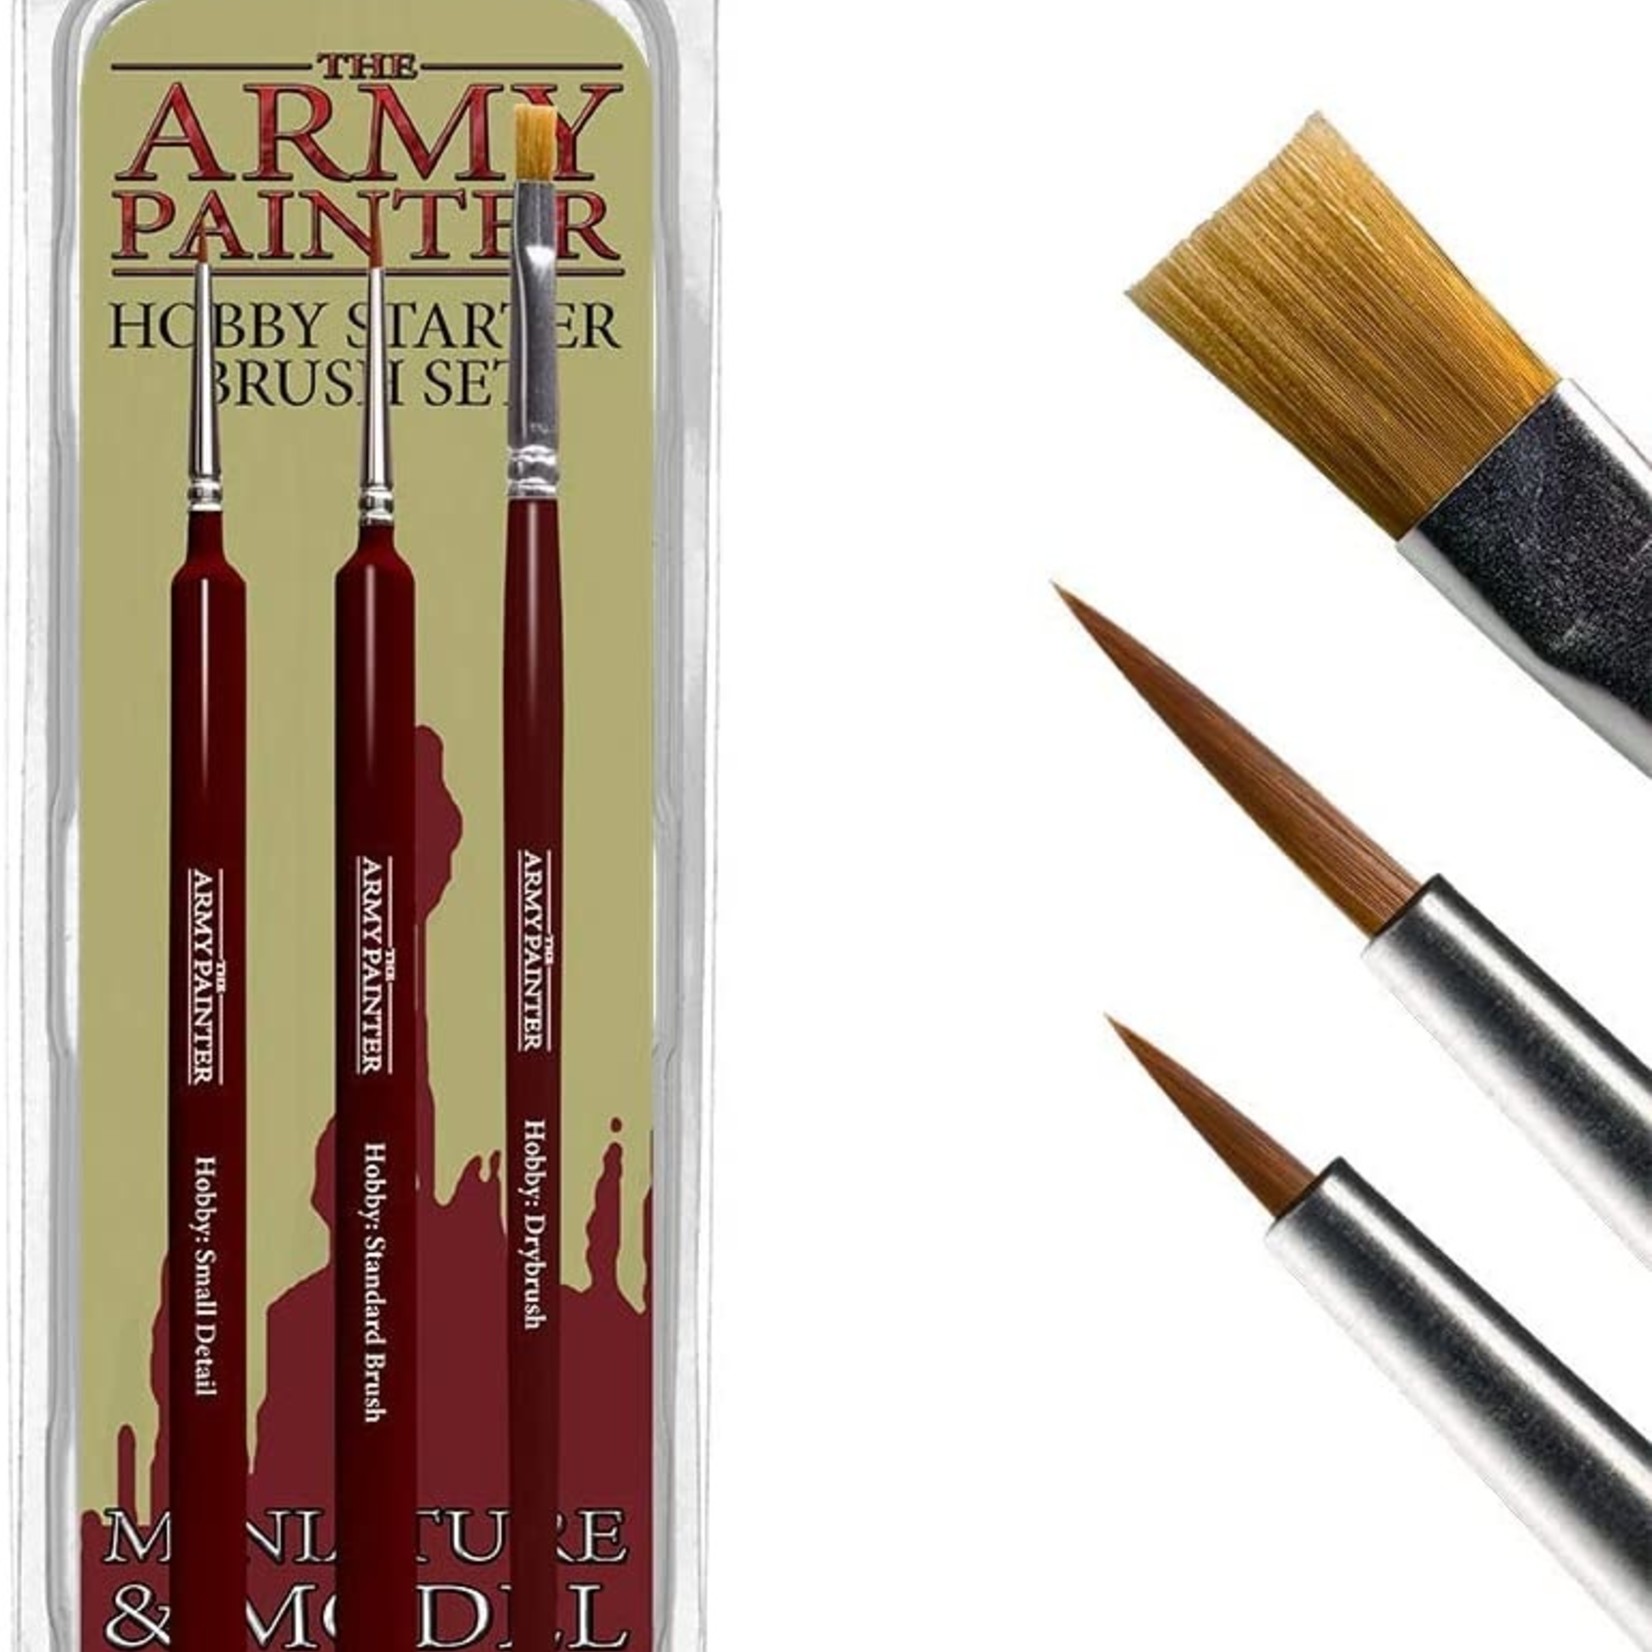 Army Painter Army Painter Hobby Starter Brush Set